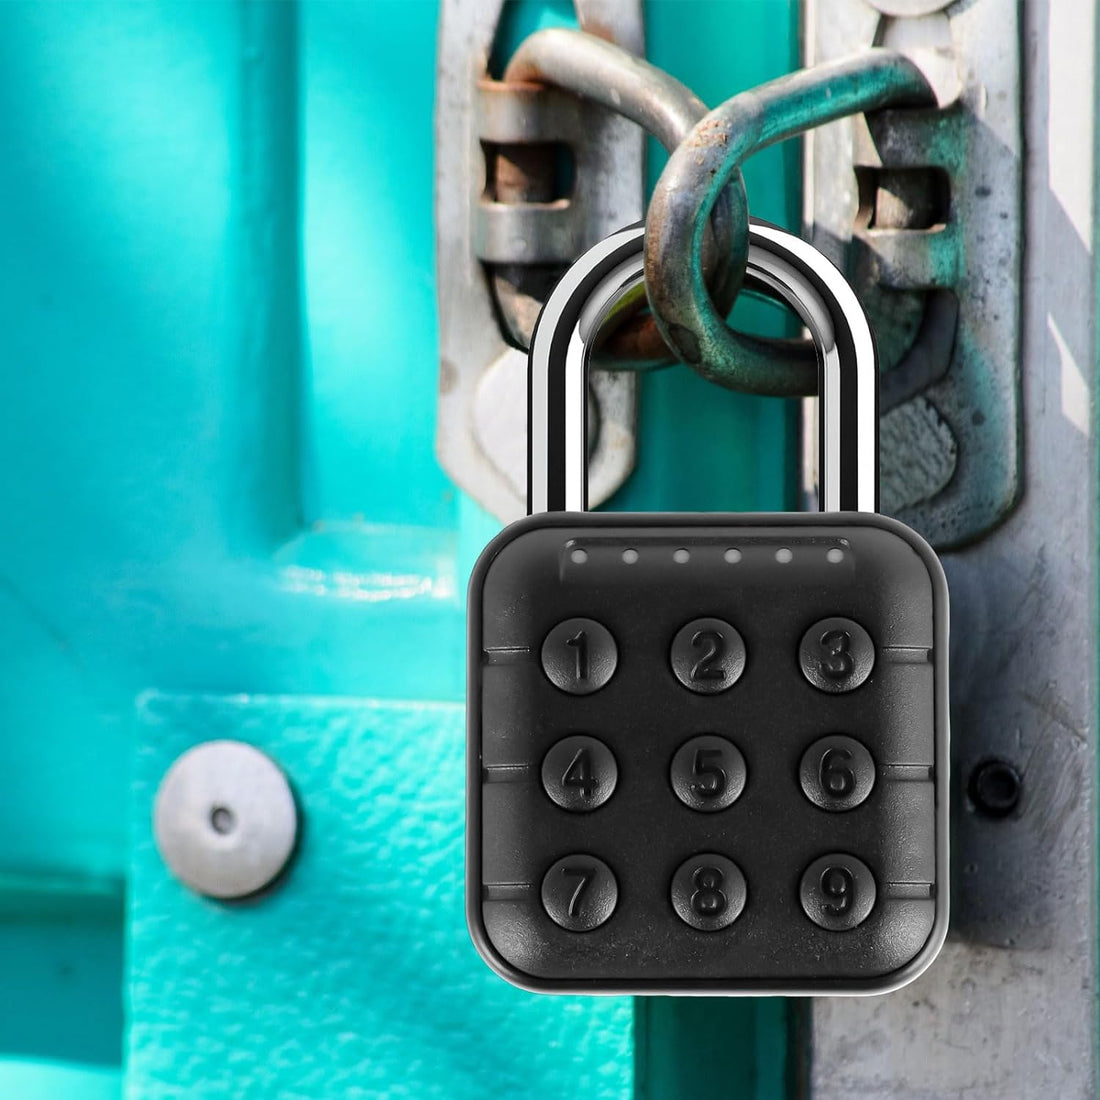 Combination Lock, 6 Digit Password Locker Lock Aluminum Alloy Code Digital Padlock, Push Button Safe Padlock Security Padlock, Combination Padlock for Gym and School Lockers(Black)